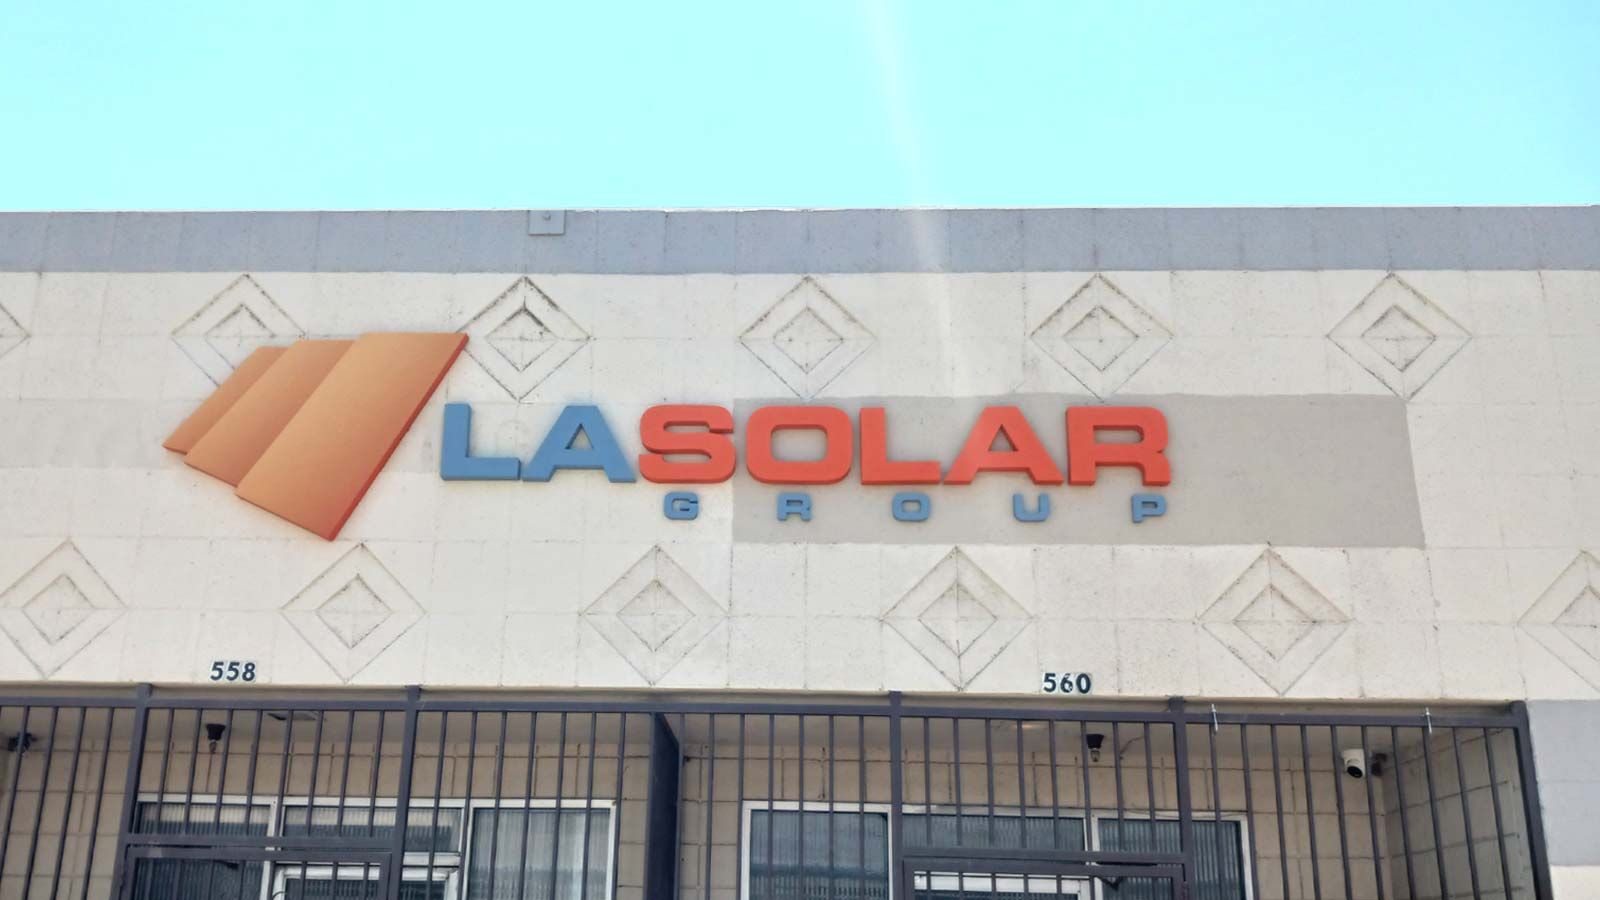 LA Solar Group outdoor sign installation on the facade